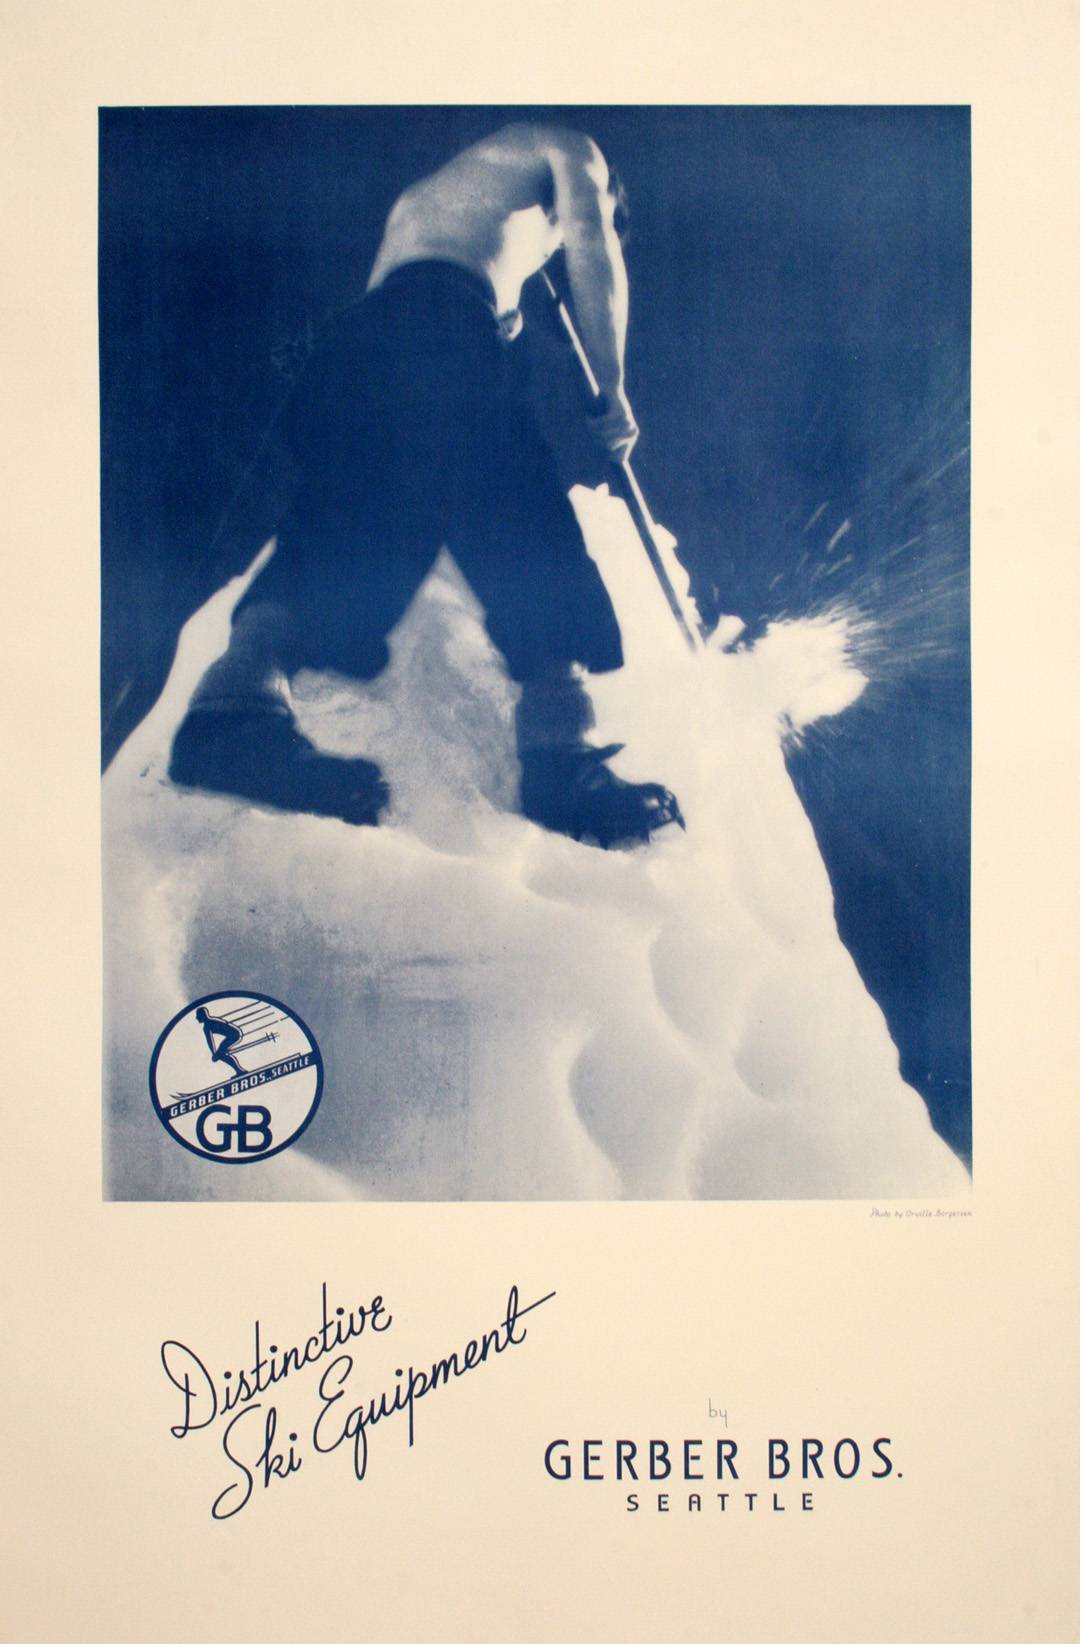 Original Vintage 1950's Gerber Bros. Seattle Ski Poster - Climber in Photo